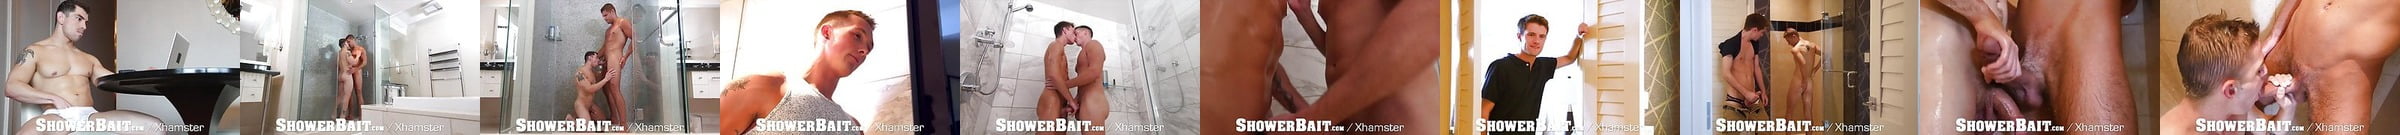 Shower Bait Gay Porn Videos 3 Xhamster